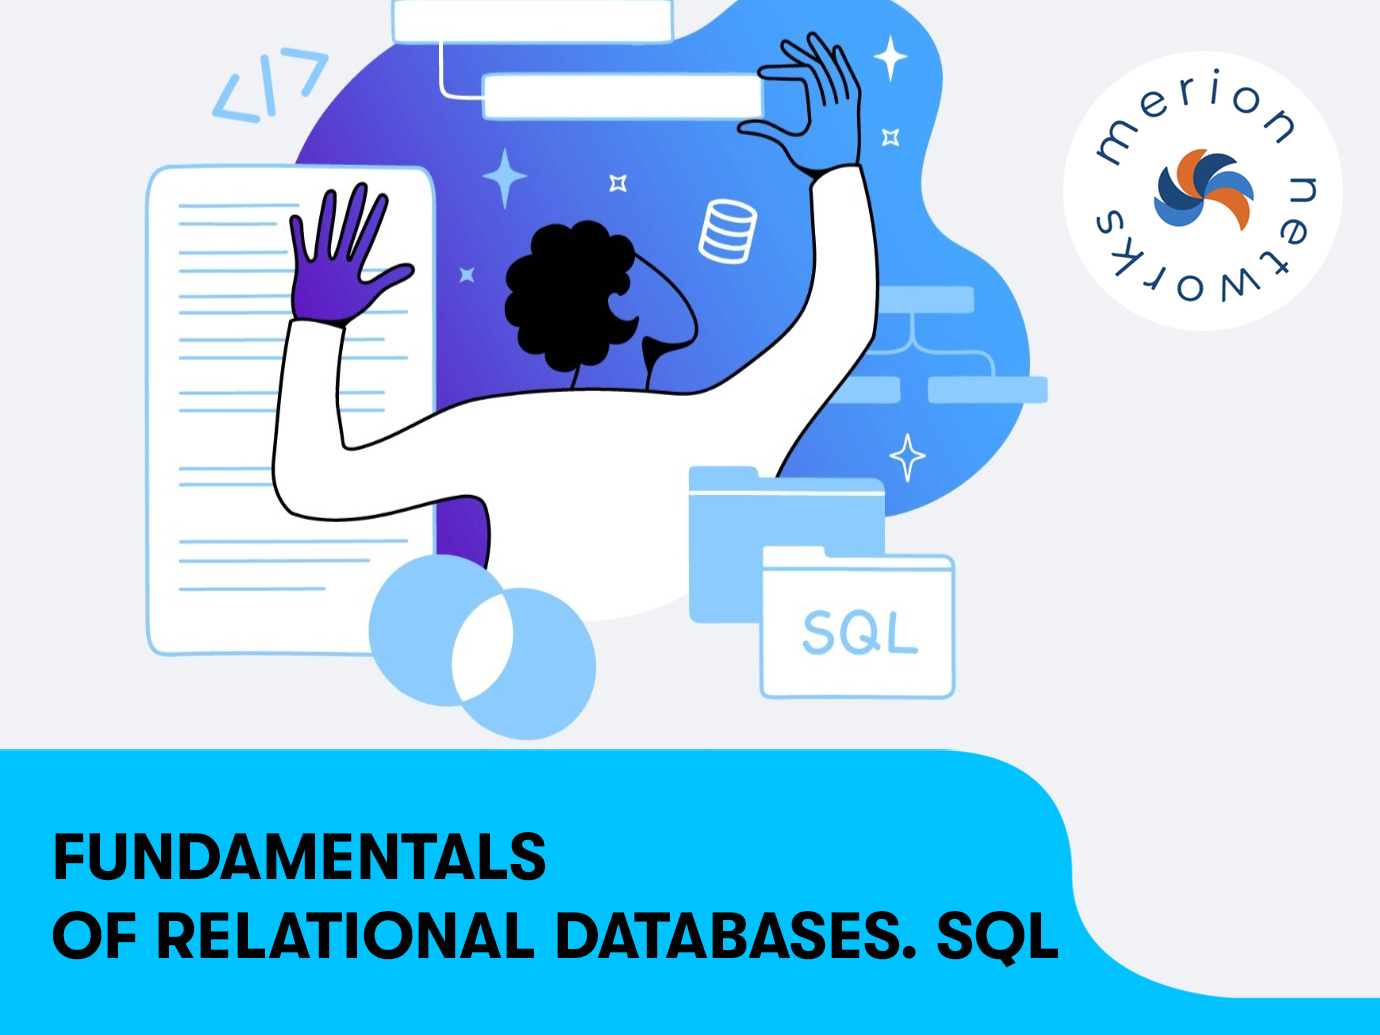 Fundamentals of relational databases. SQL